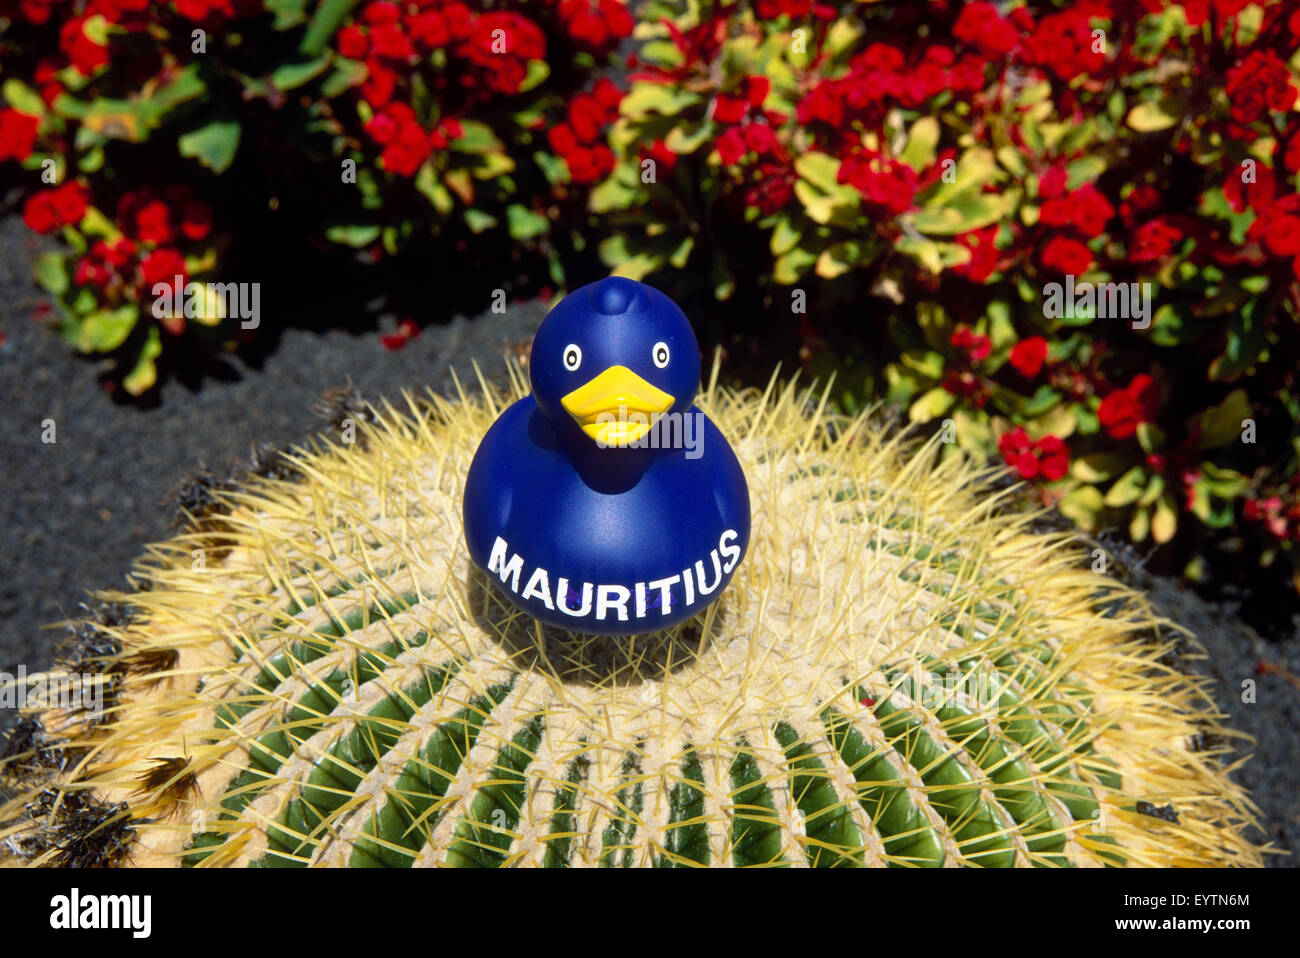 Puerto Calero, MAURICE duck, cactus Banque D'Images